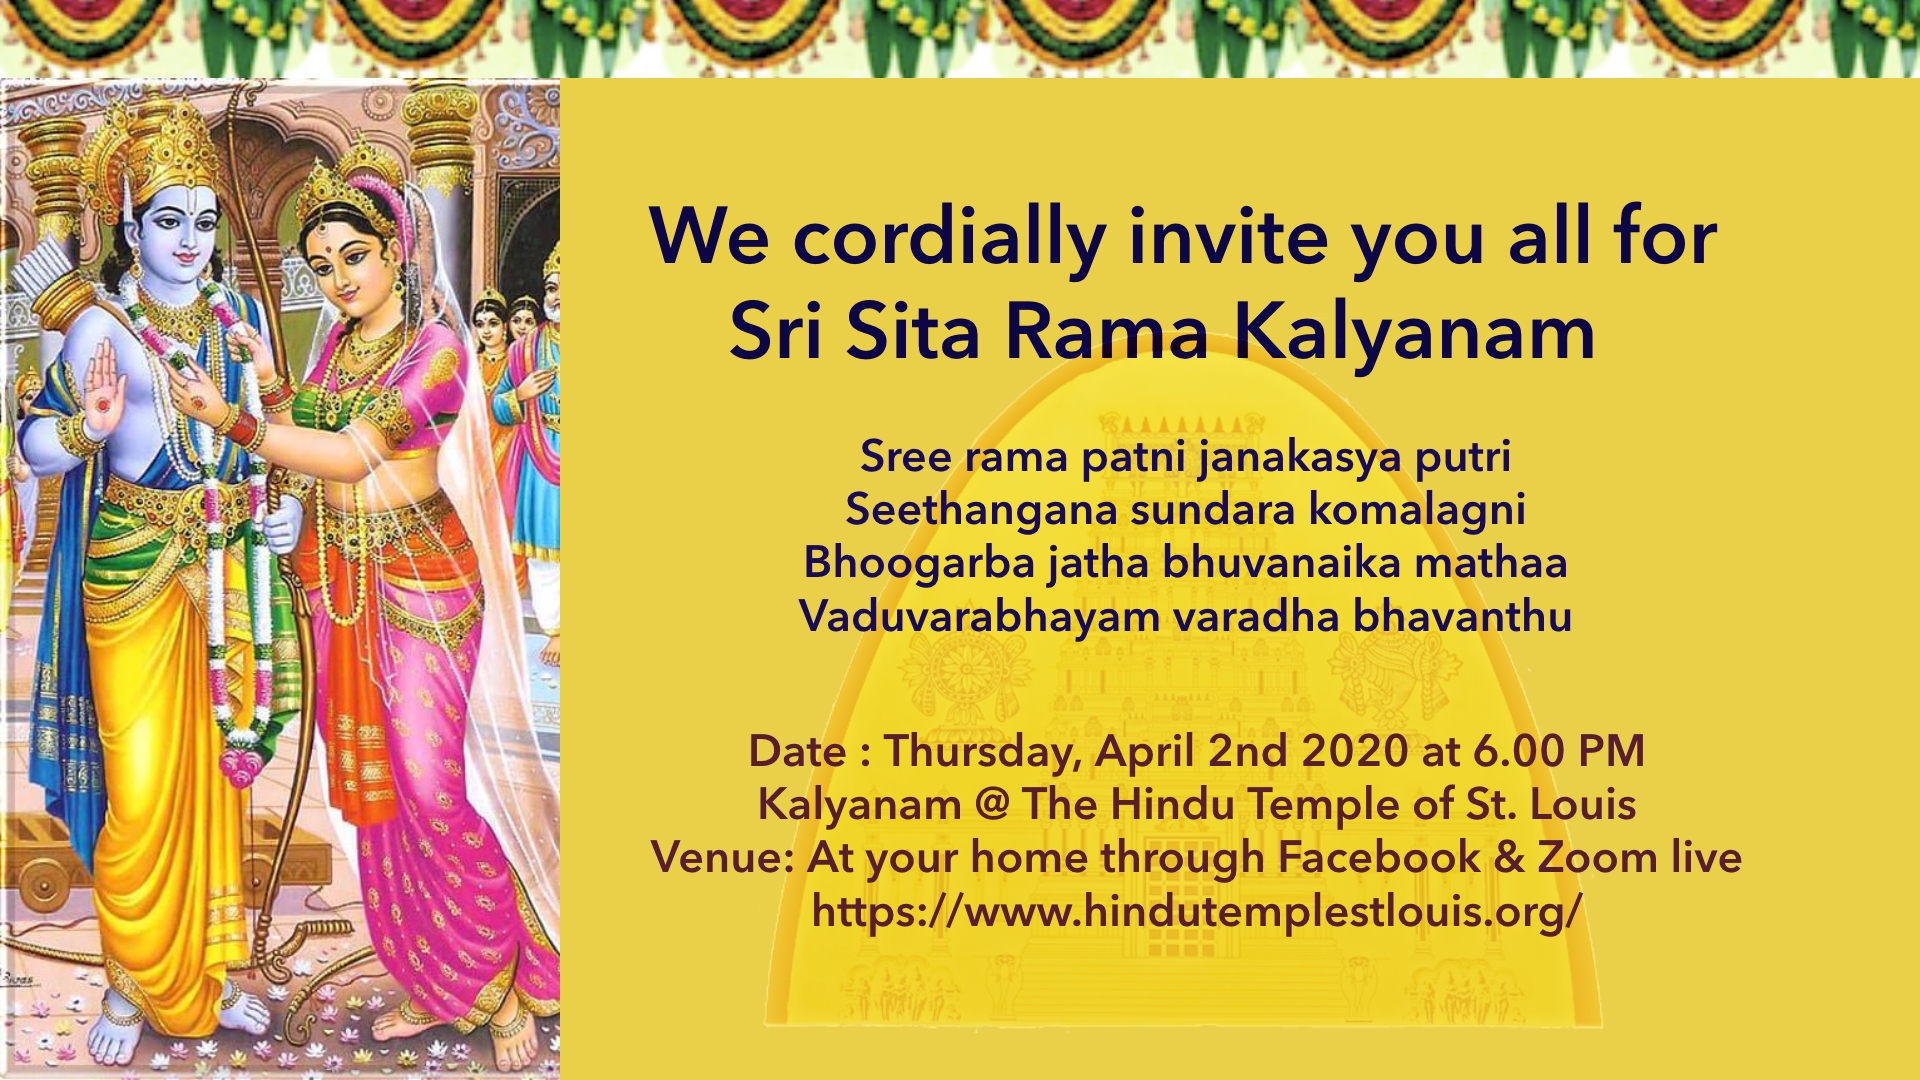 Sri Sita Rama Kalyanam The Hindu Temple of St. Louis